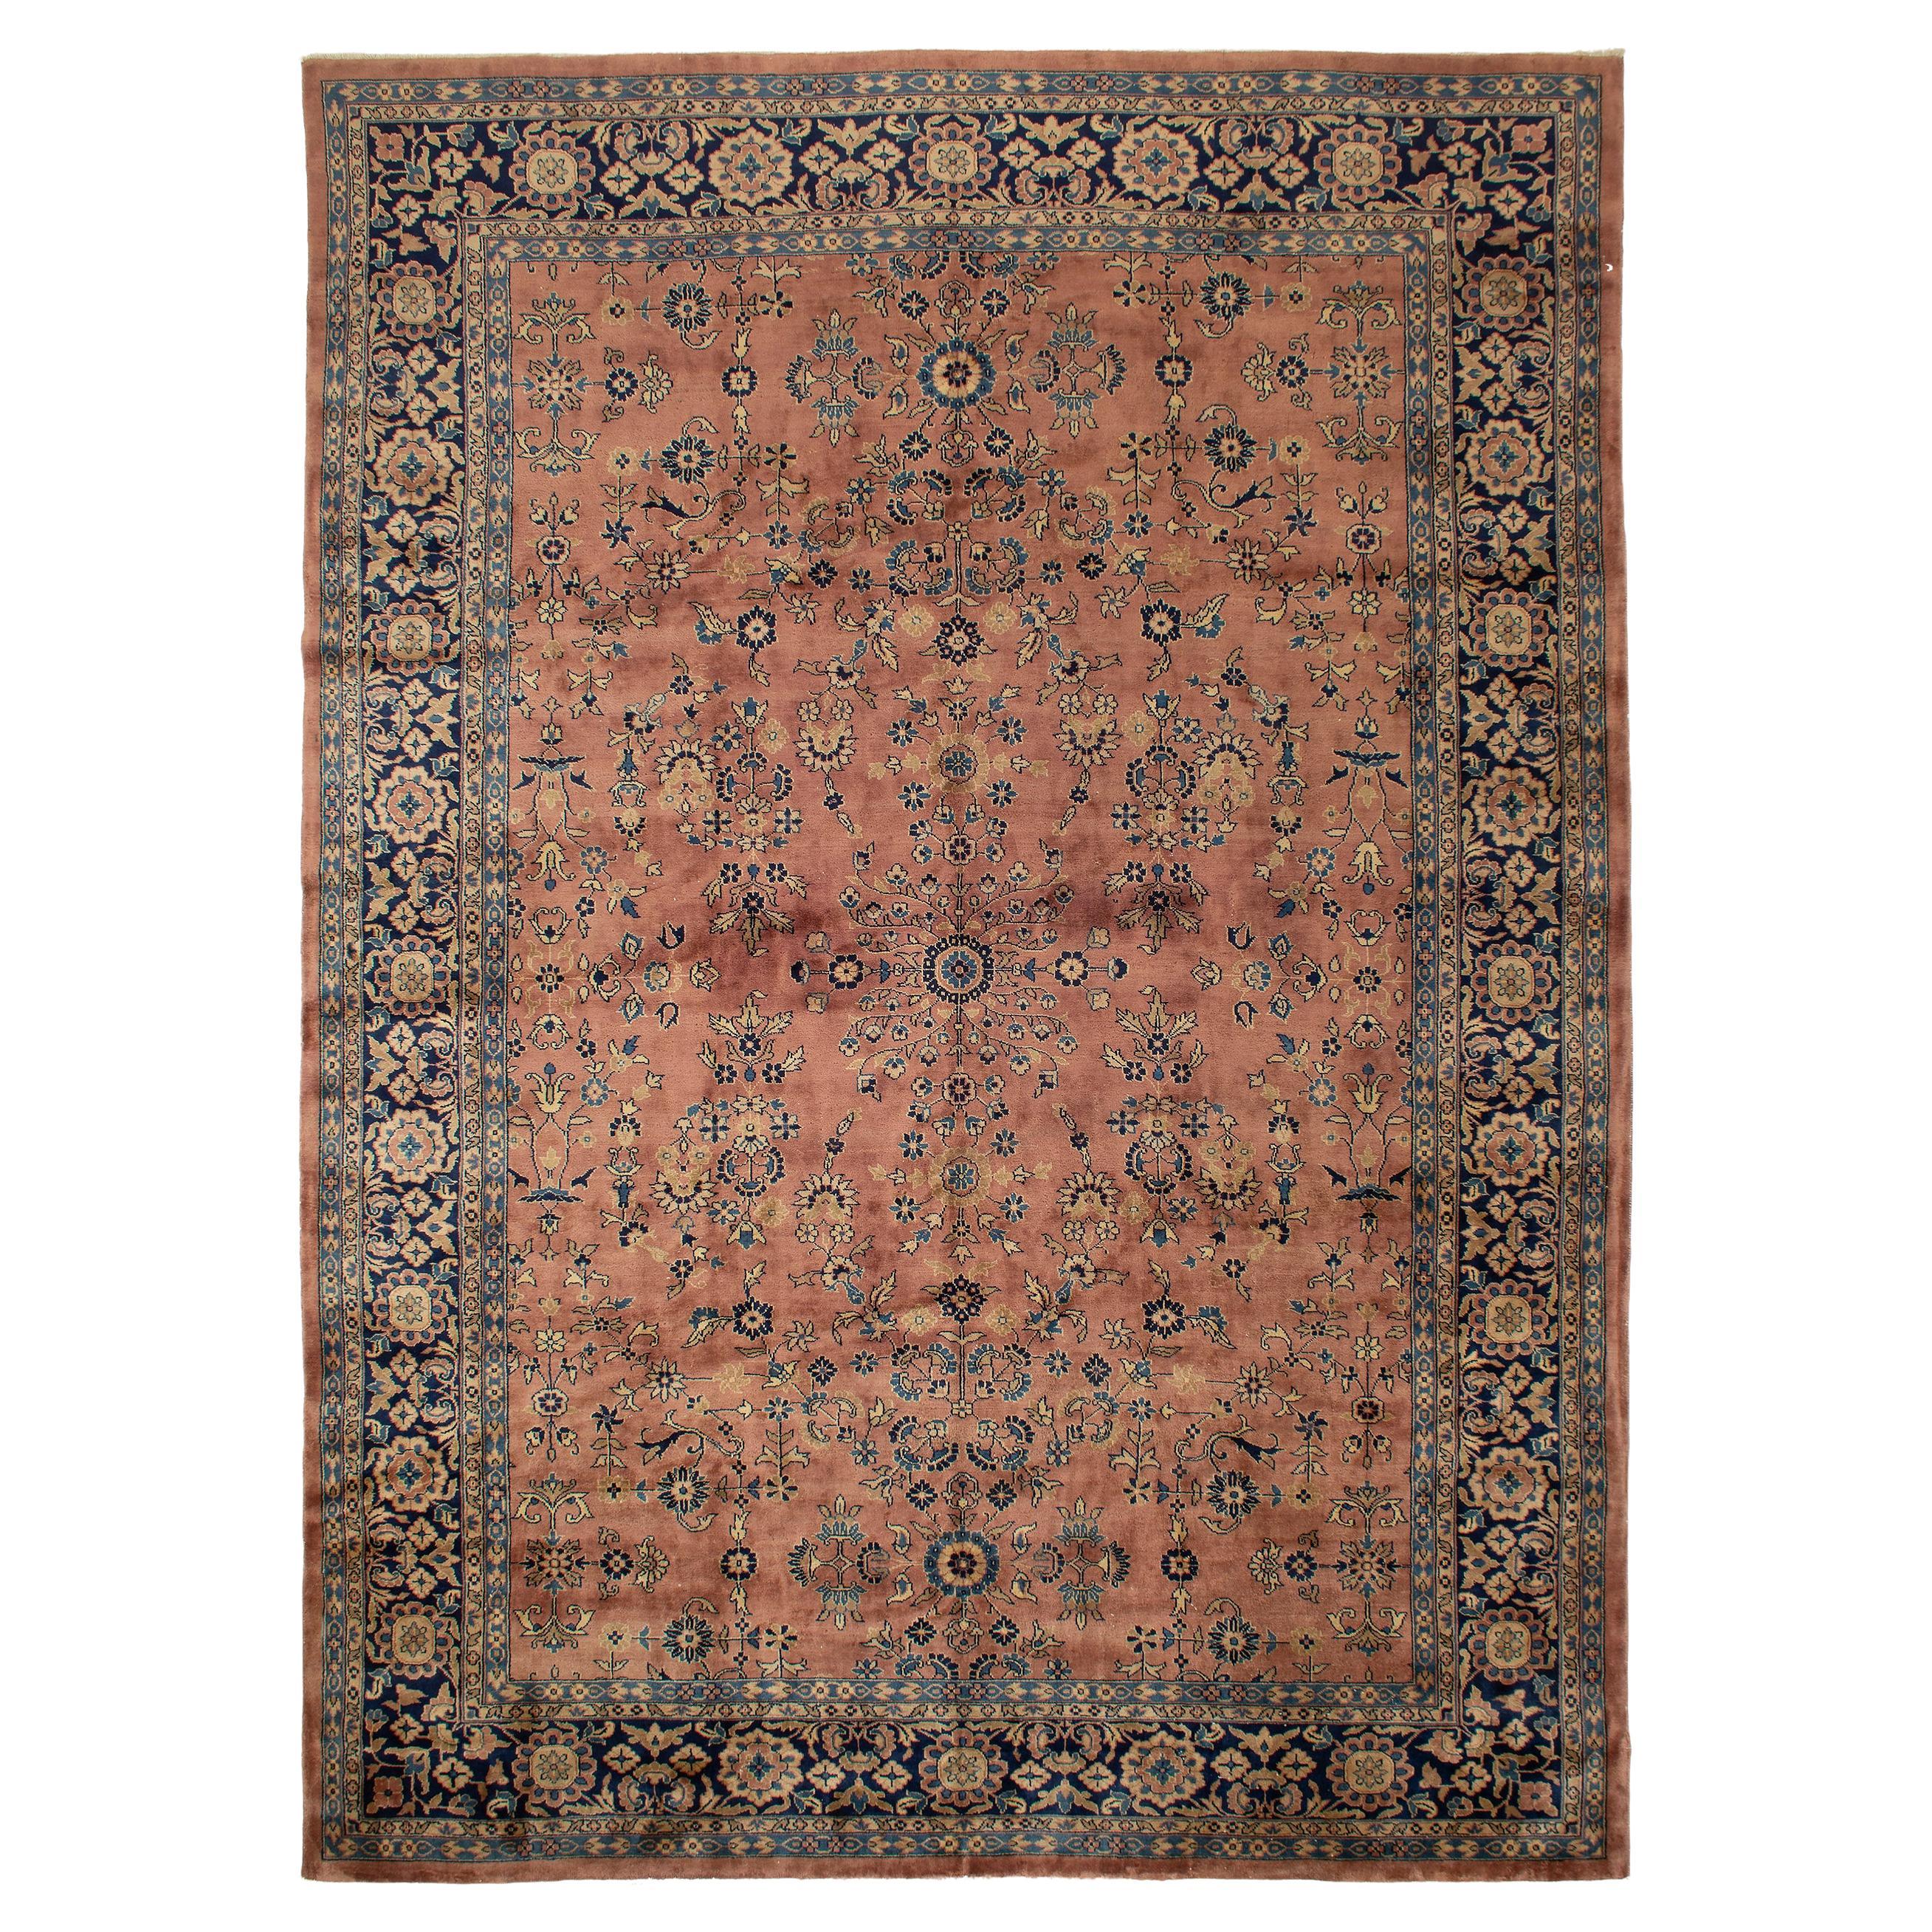 Antique Indian Sarouk Carpet For Sale